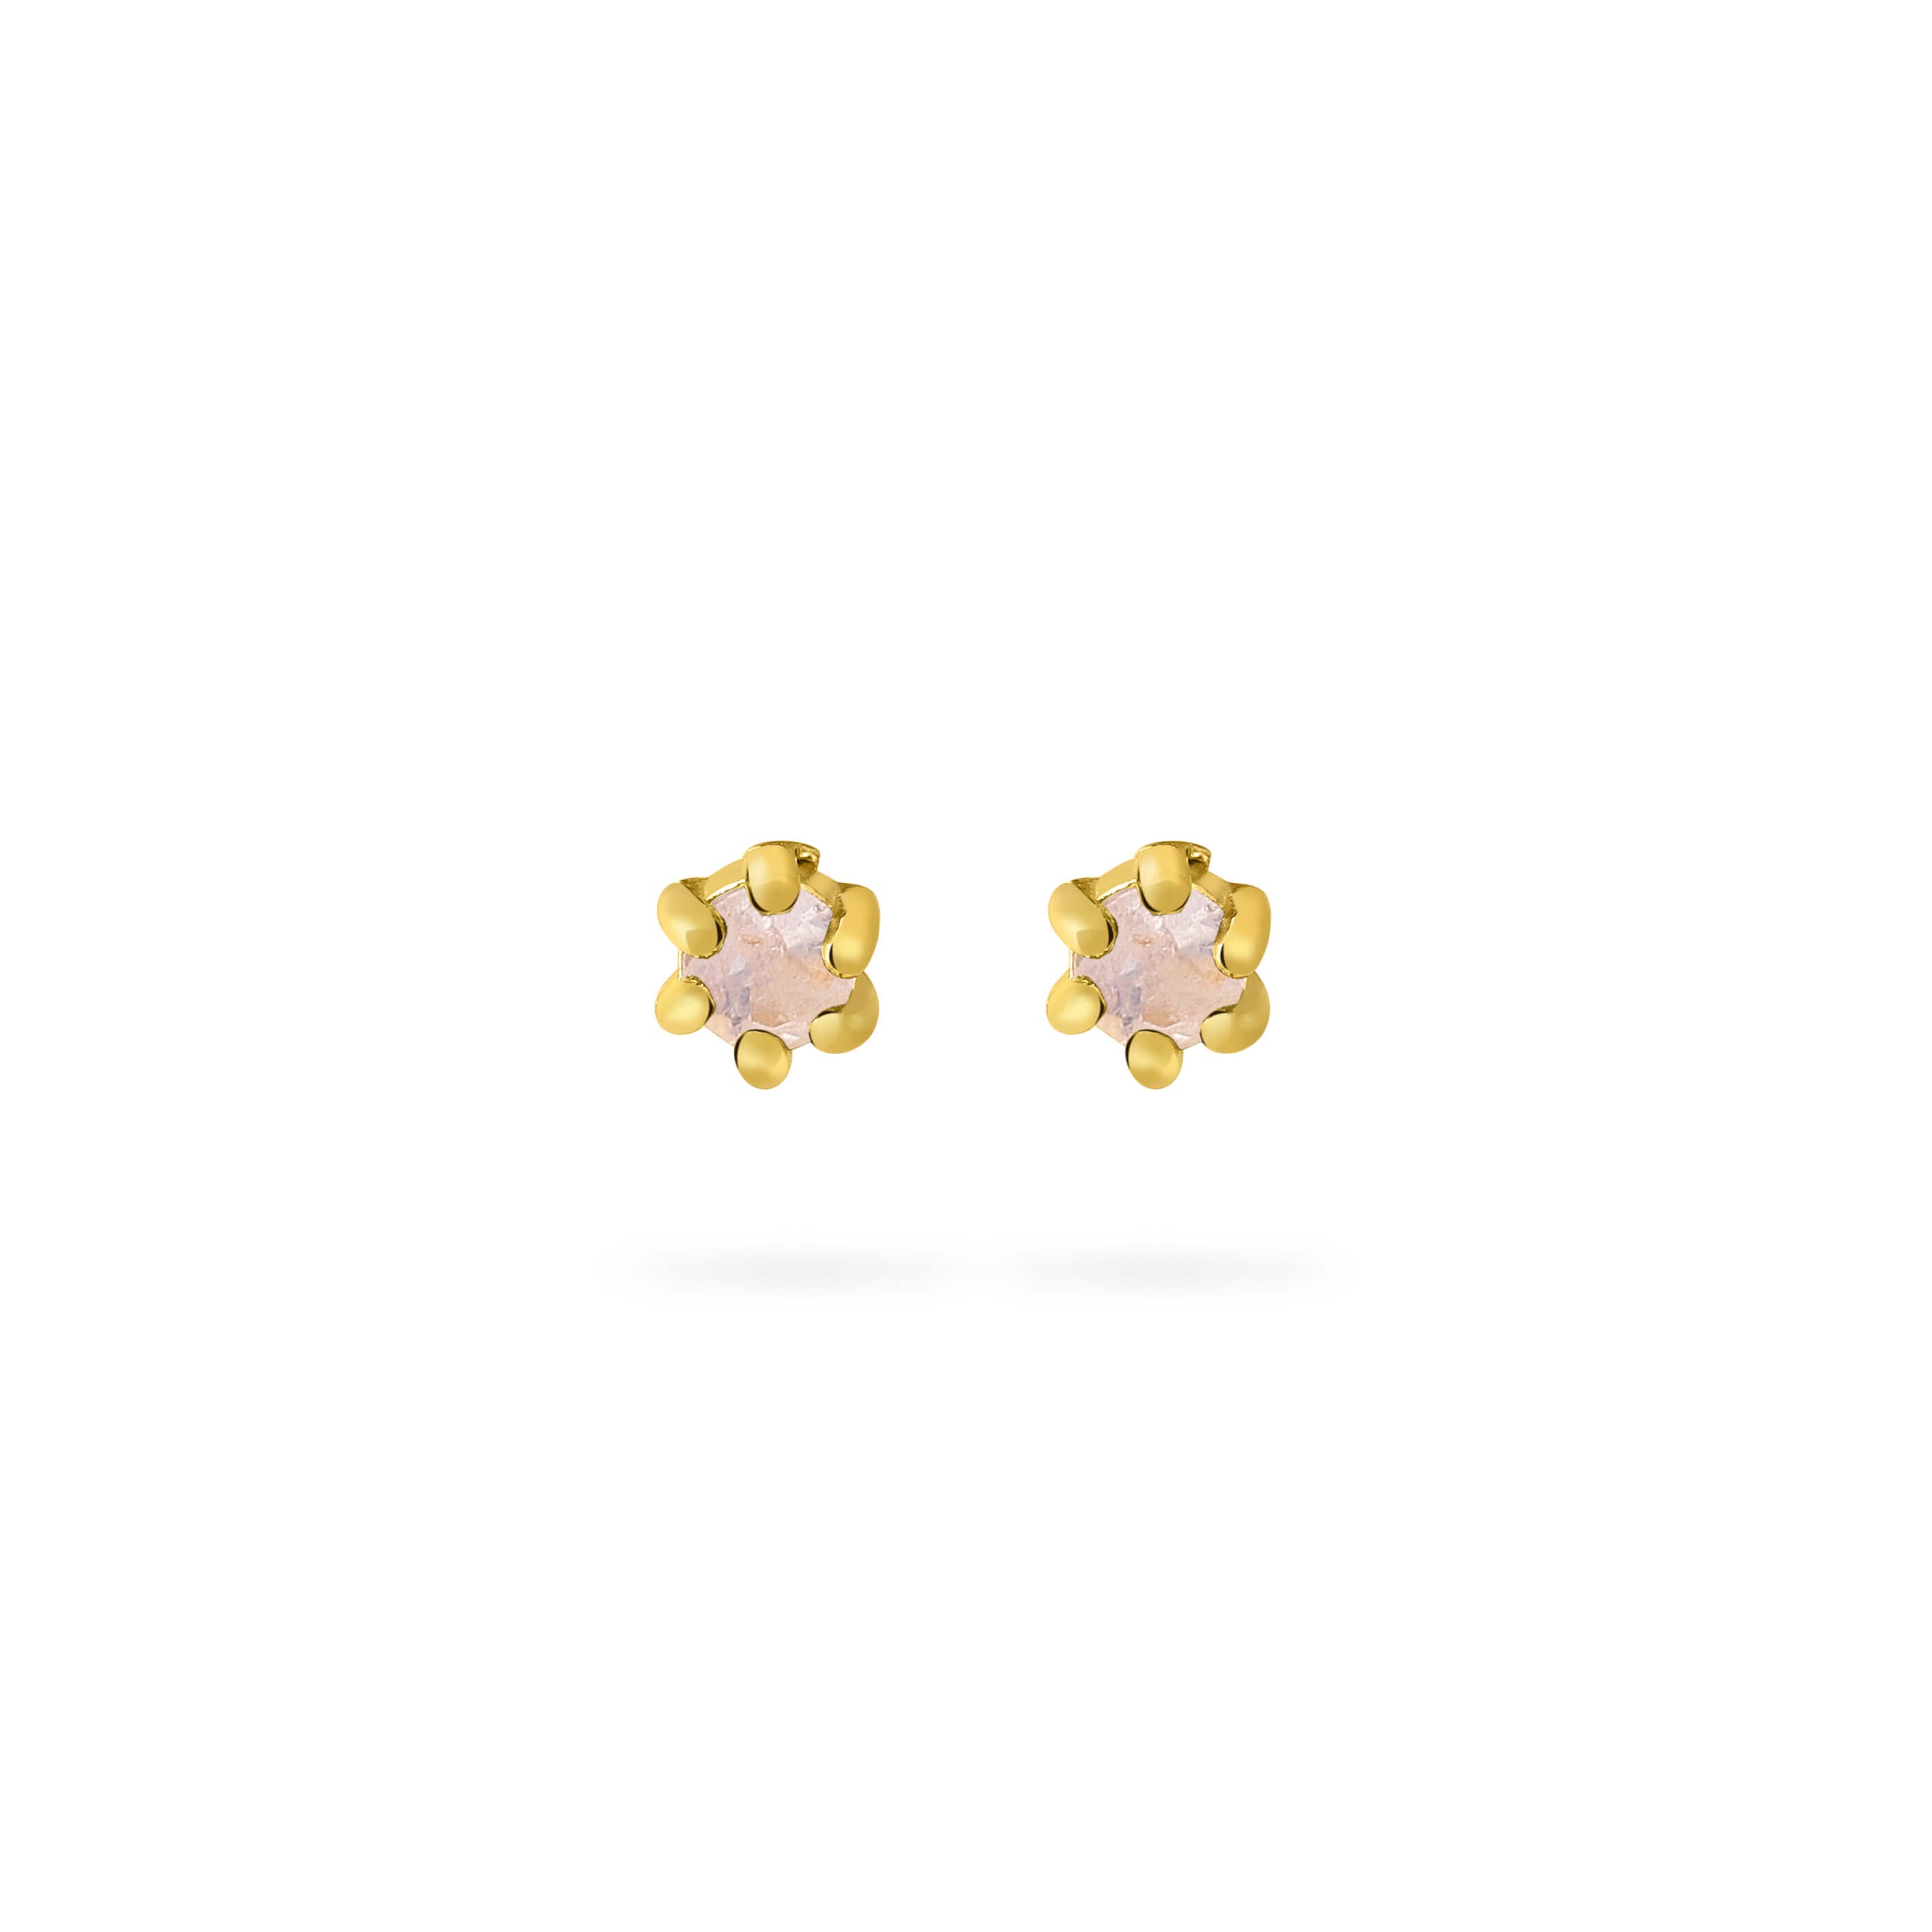 White Opal Stud Earrings Gold PLated